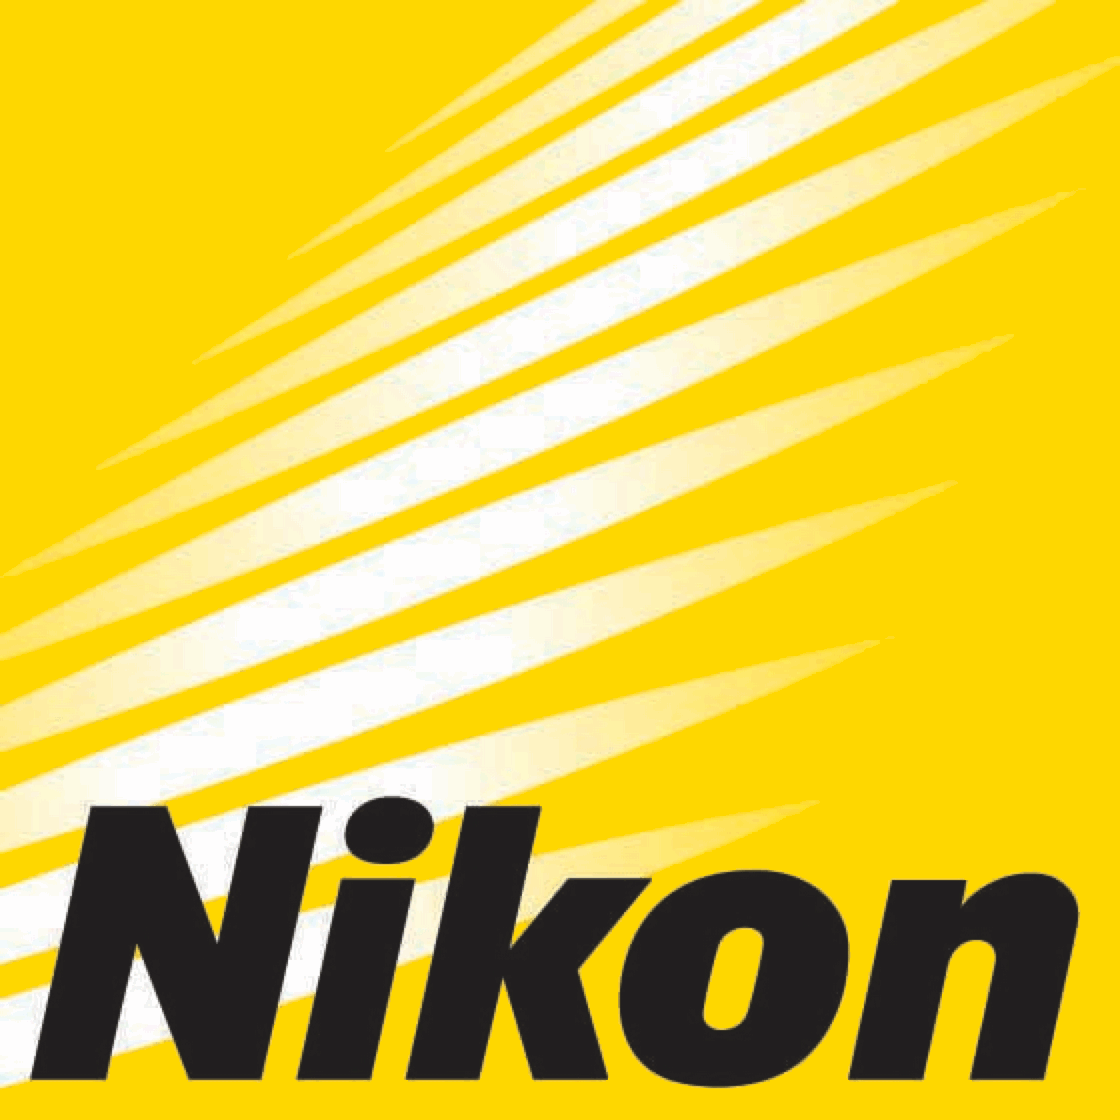 Nikon Instruments